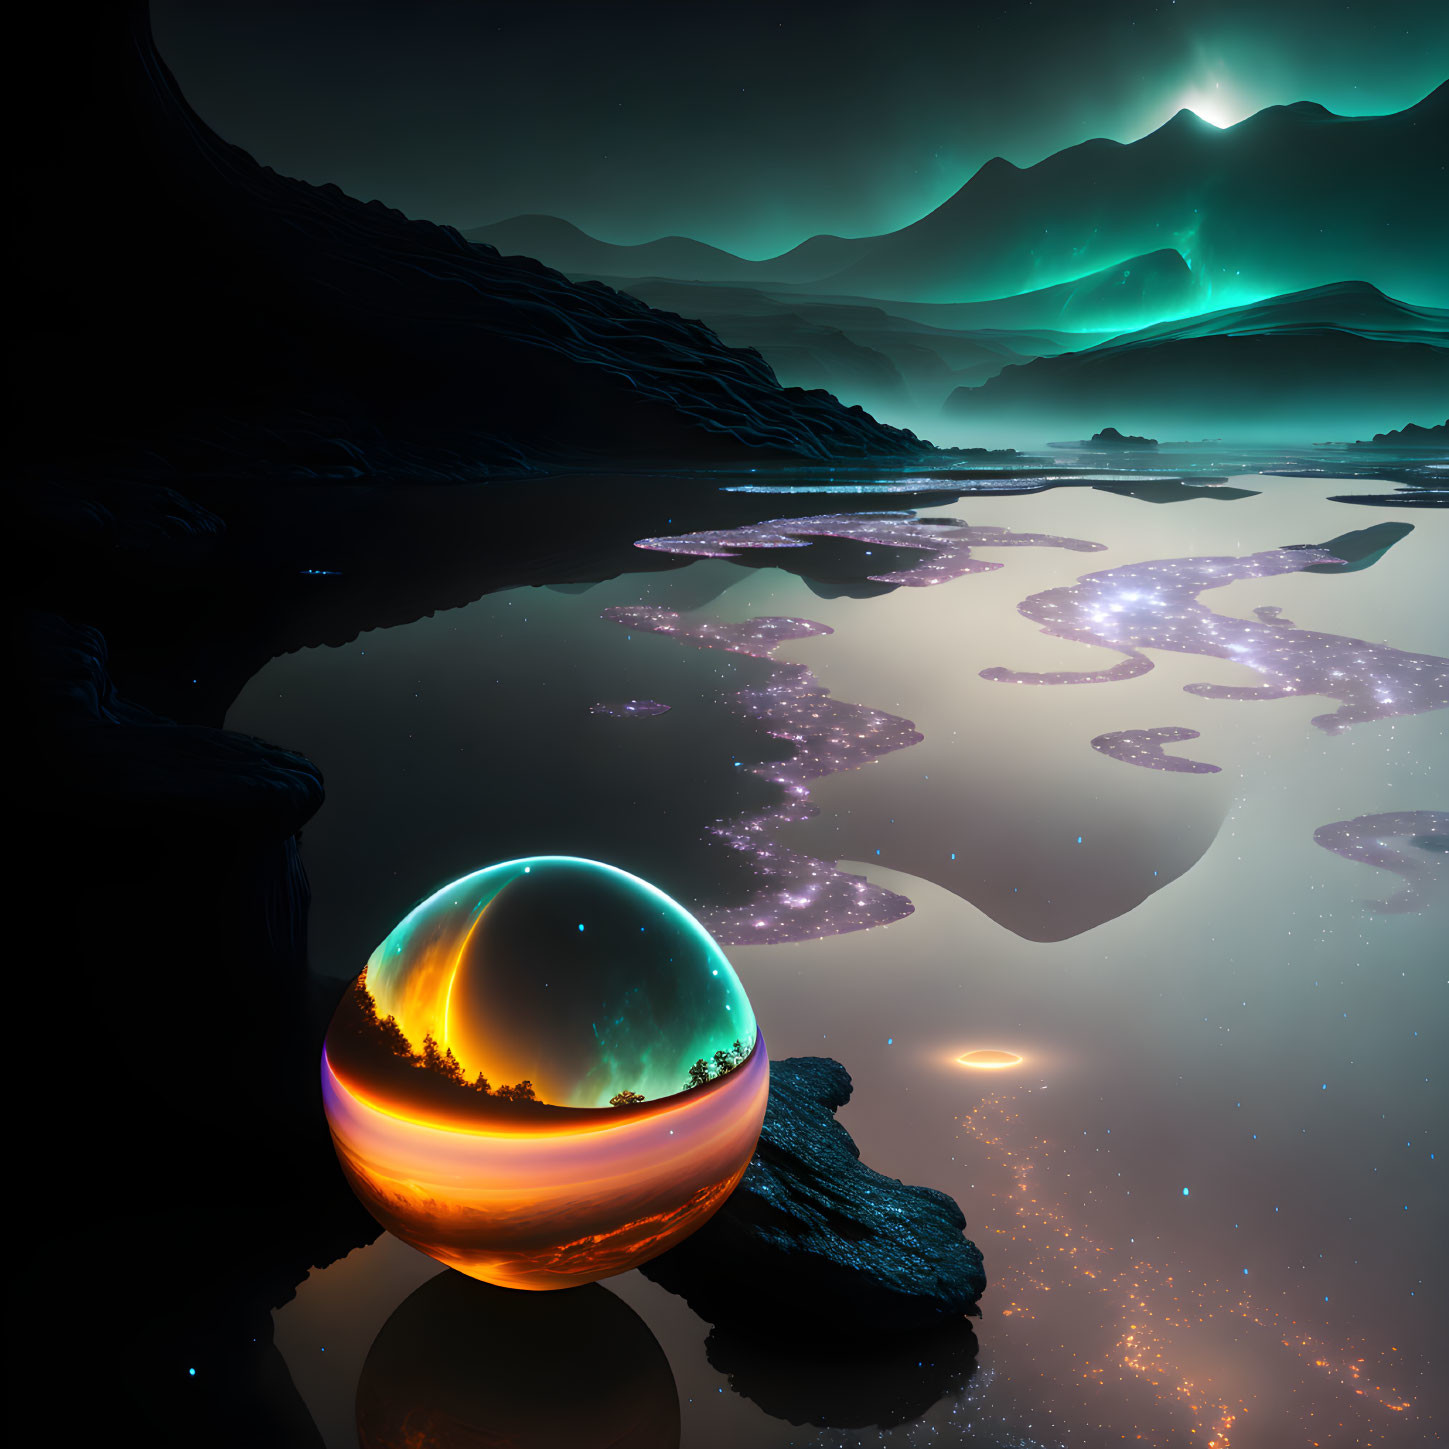 Otherworldly landscape: glowing sphere, sunset reflection, serene water, aurora sky